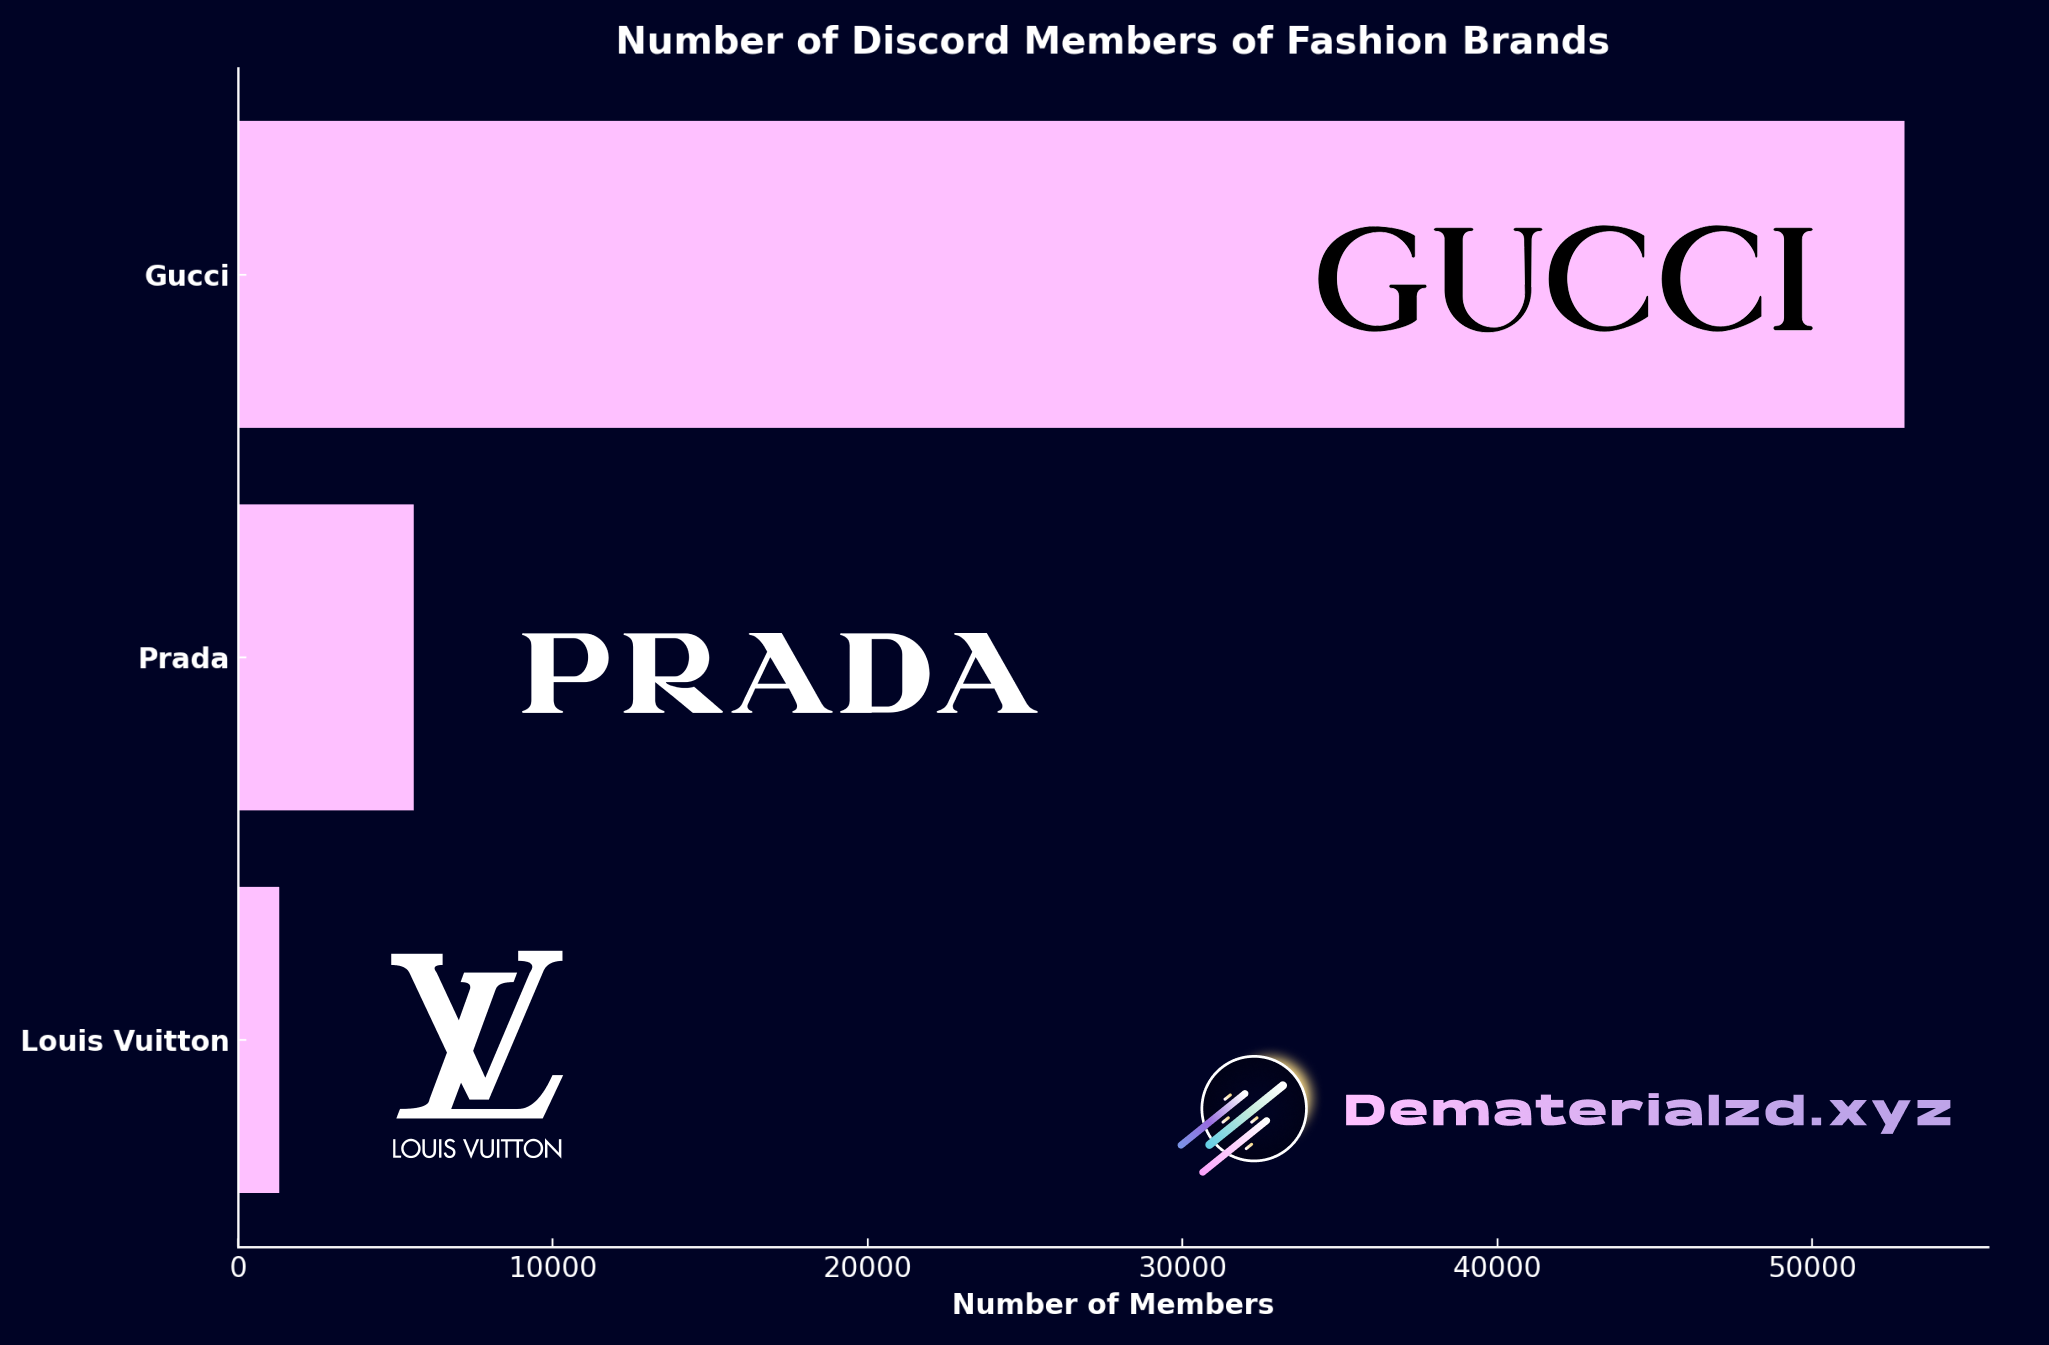 Louis Vuitton Announces Presence on Discord